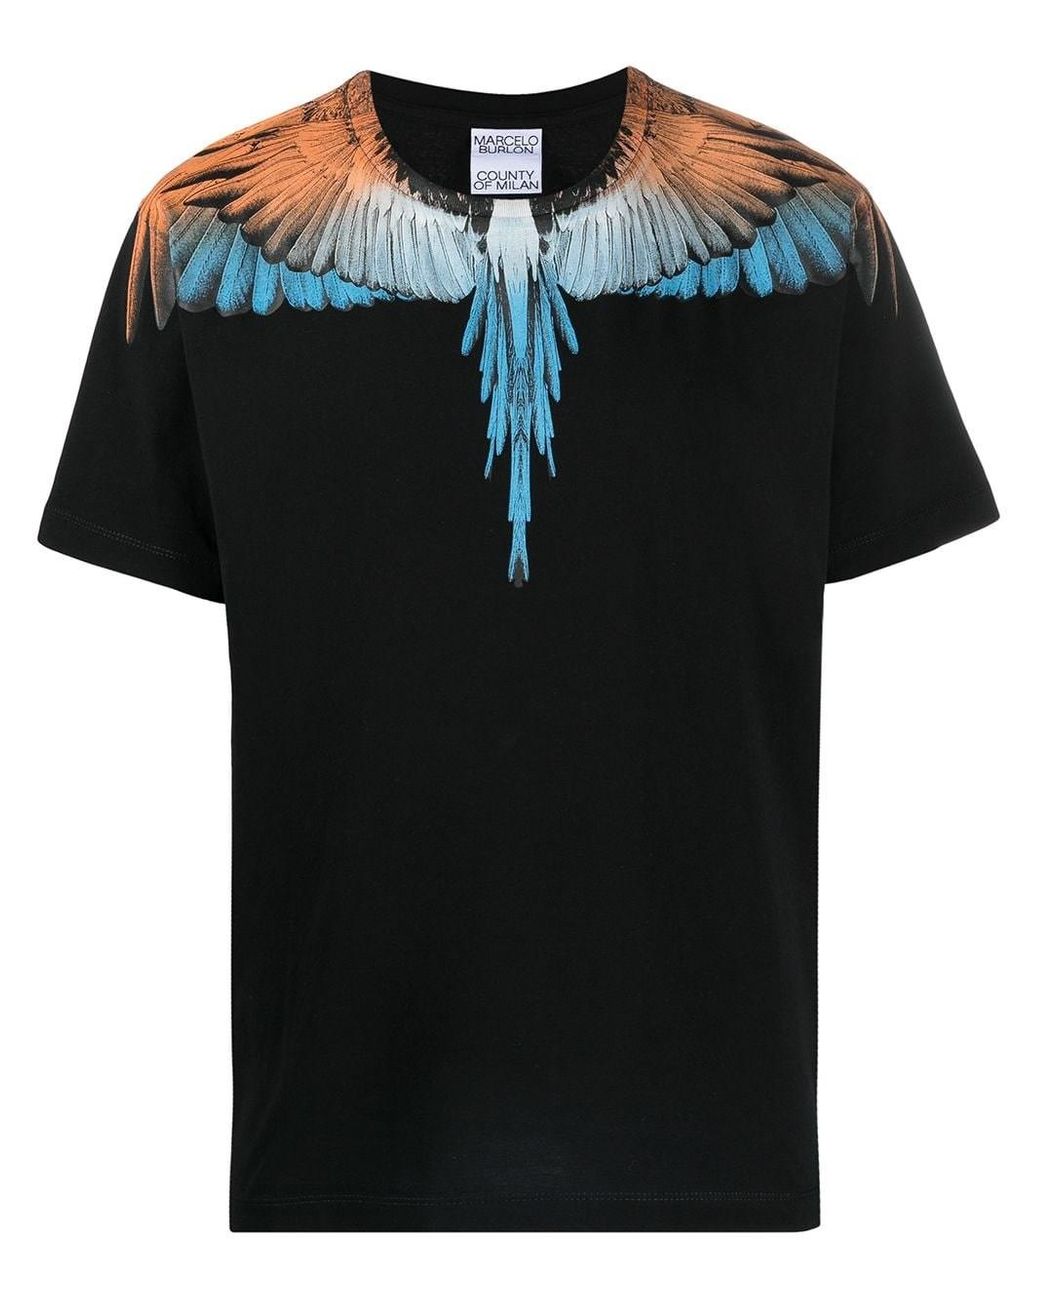 Marcelo Burlon 'wings' T-shirt in Black for Men - Lyst